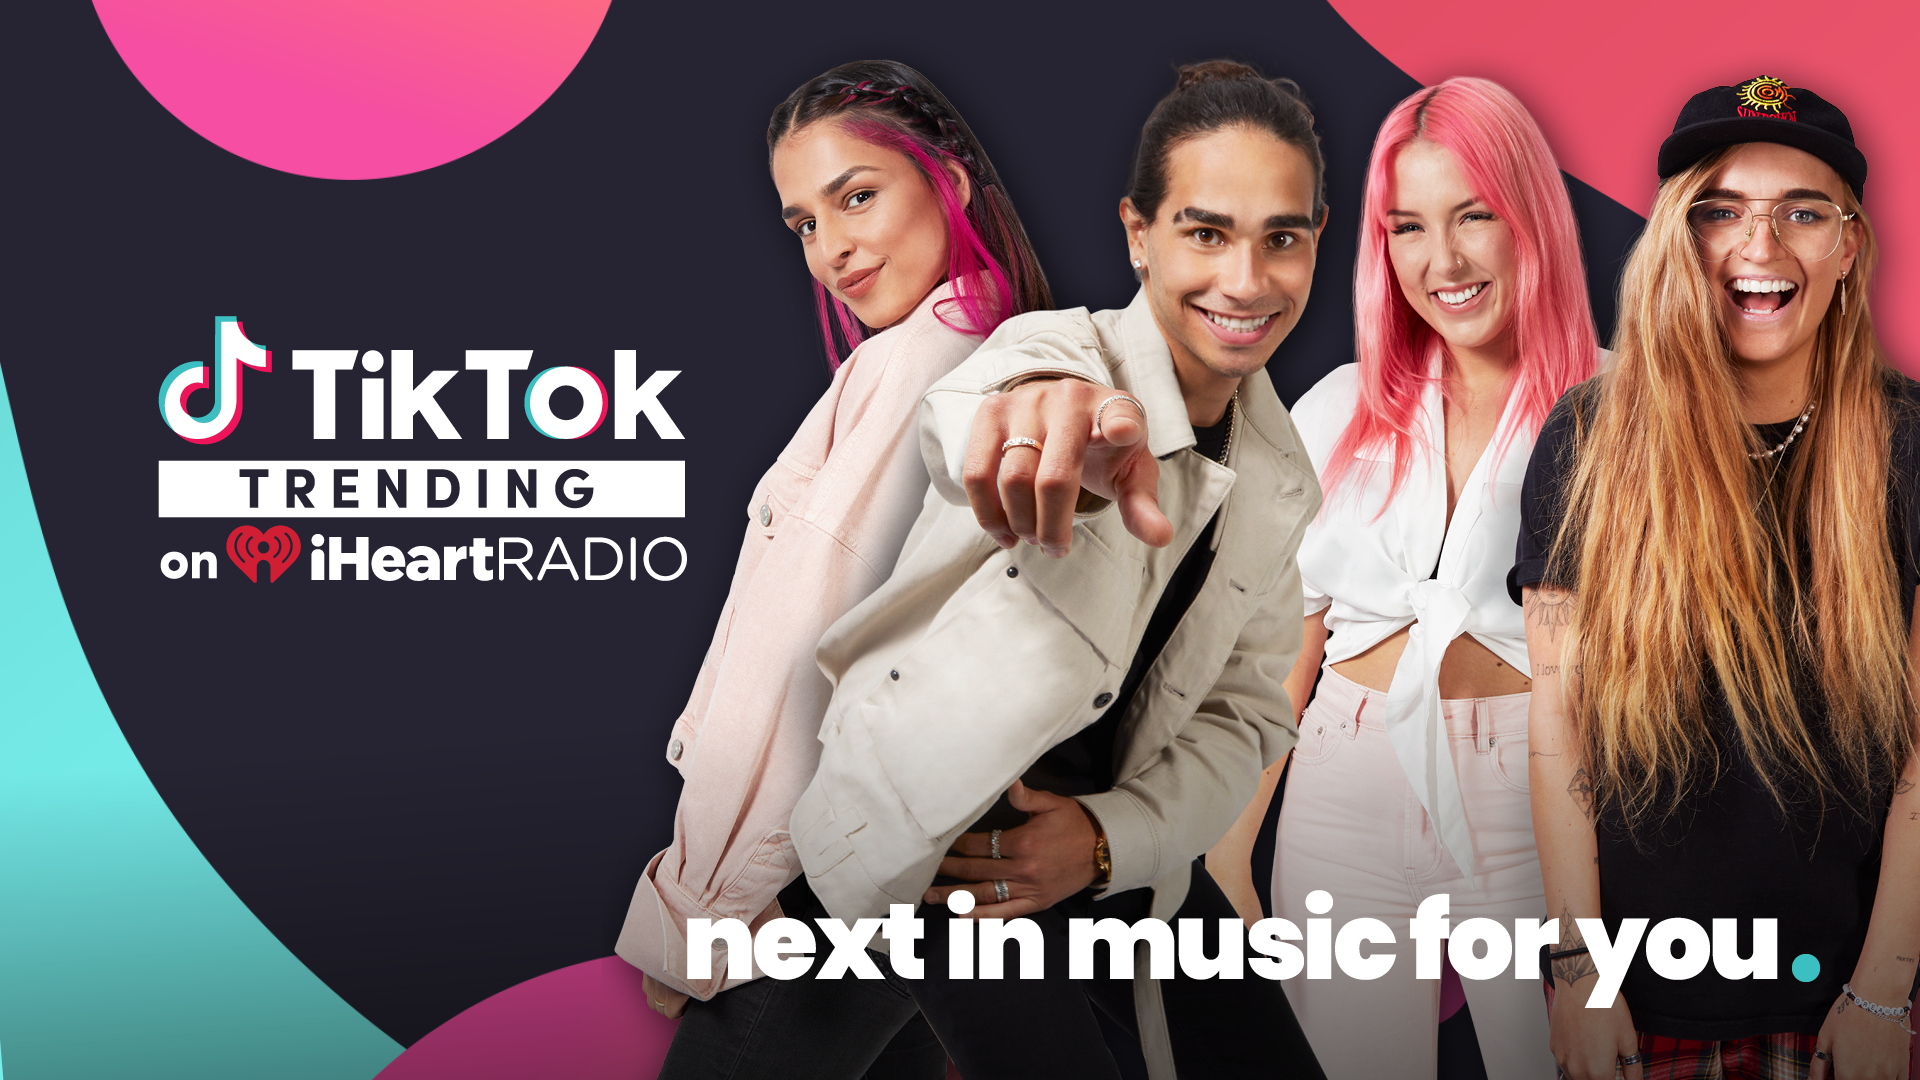 TikTok launches music station on iHeartRadio, TikTok Trending